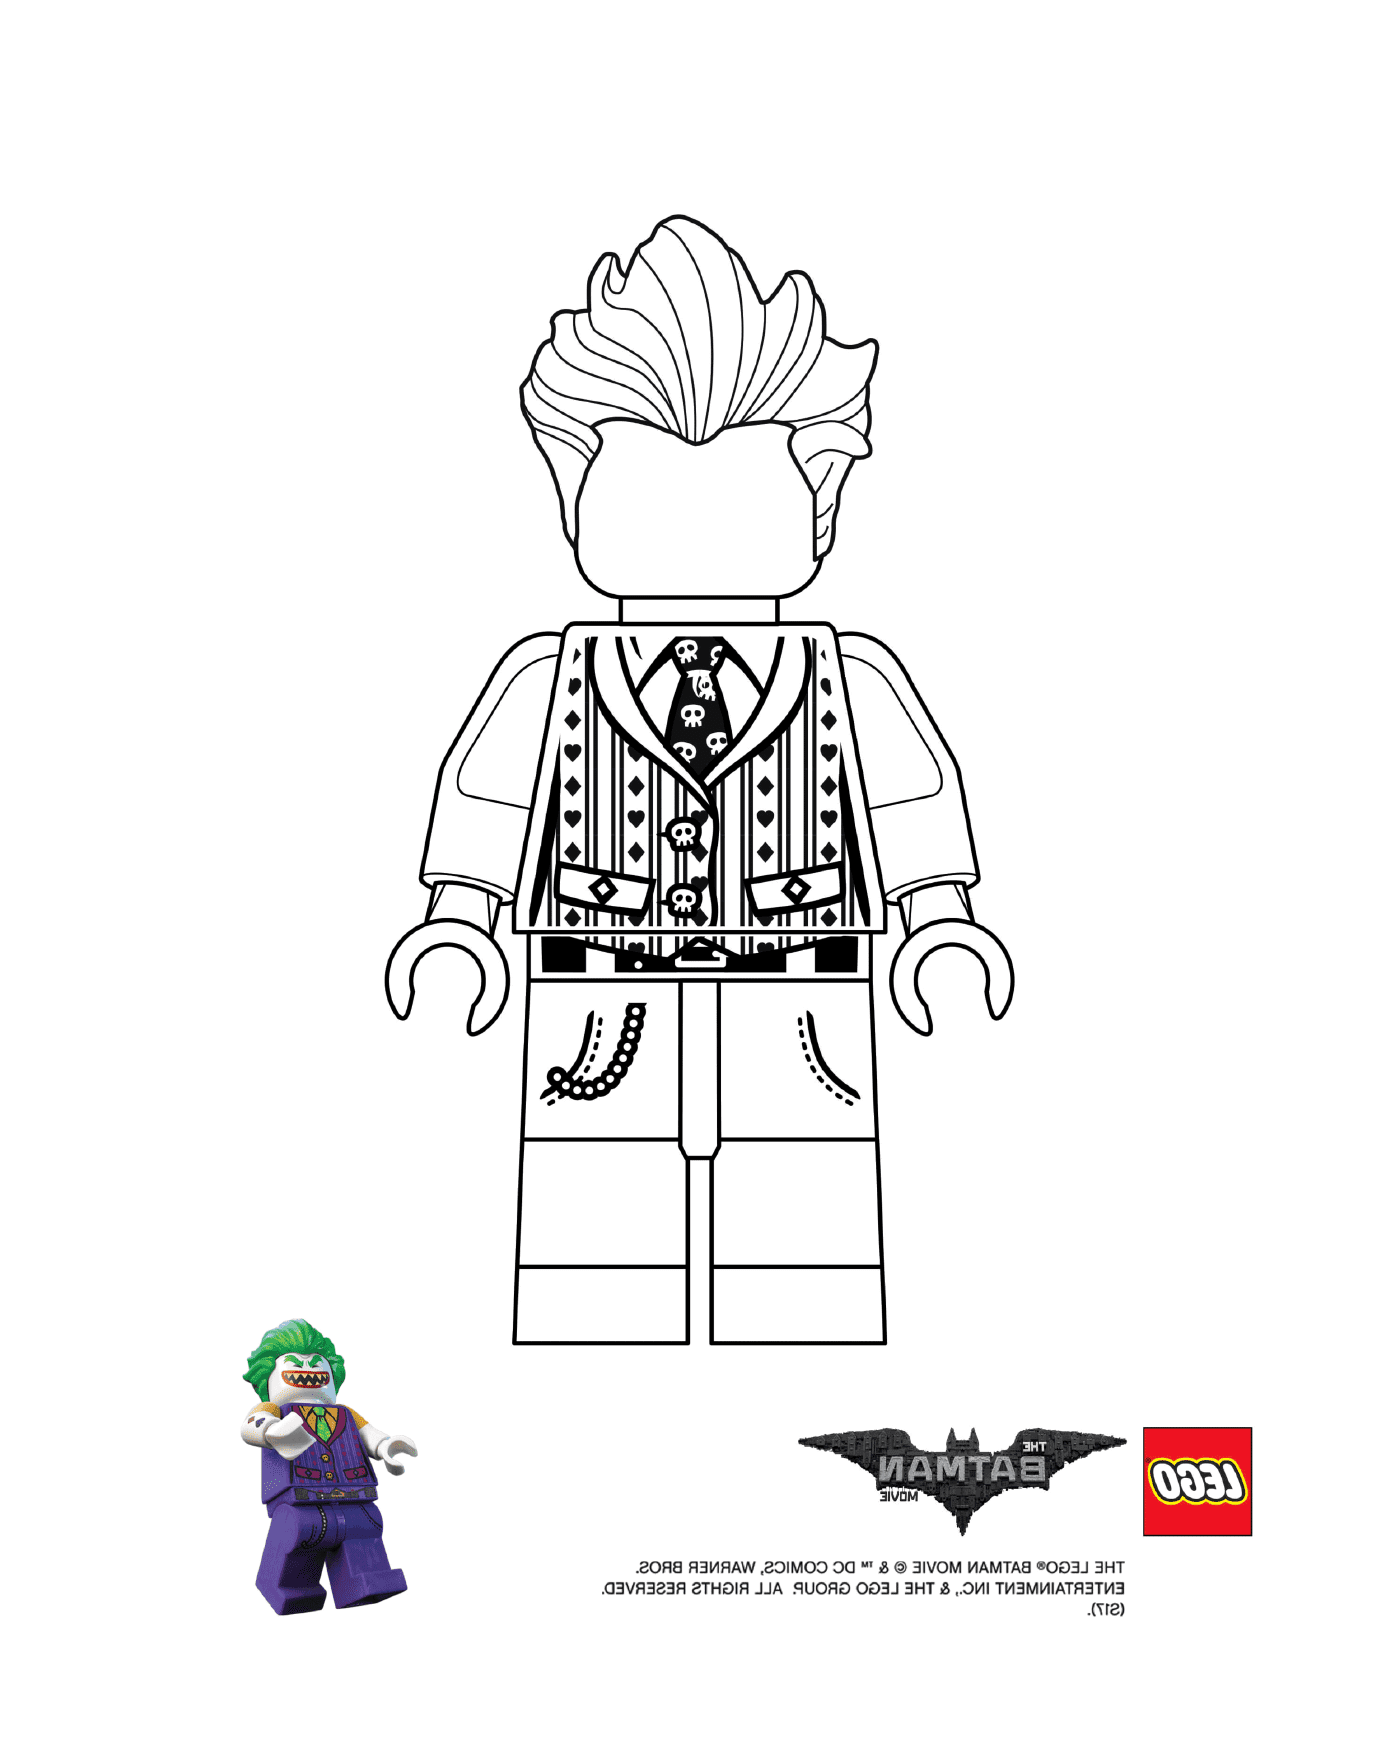  Joker Lego del film Lego Batman 